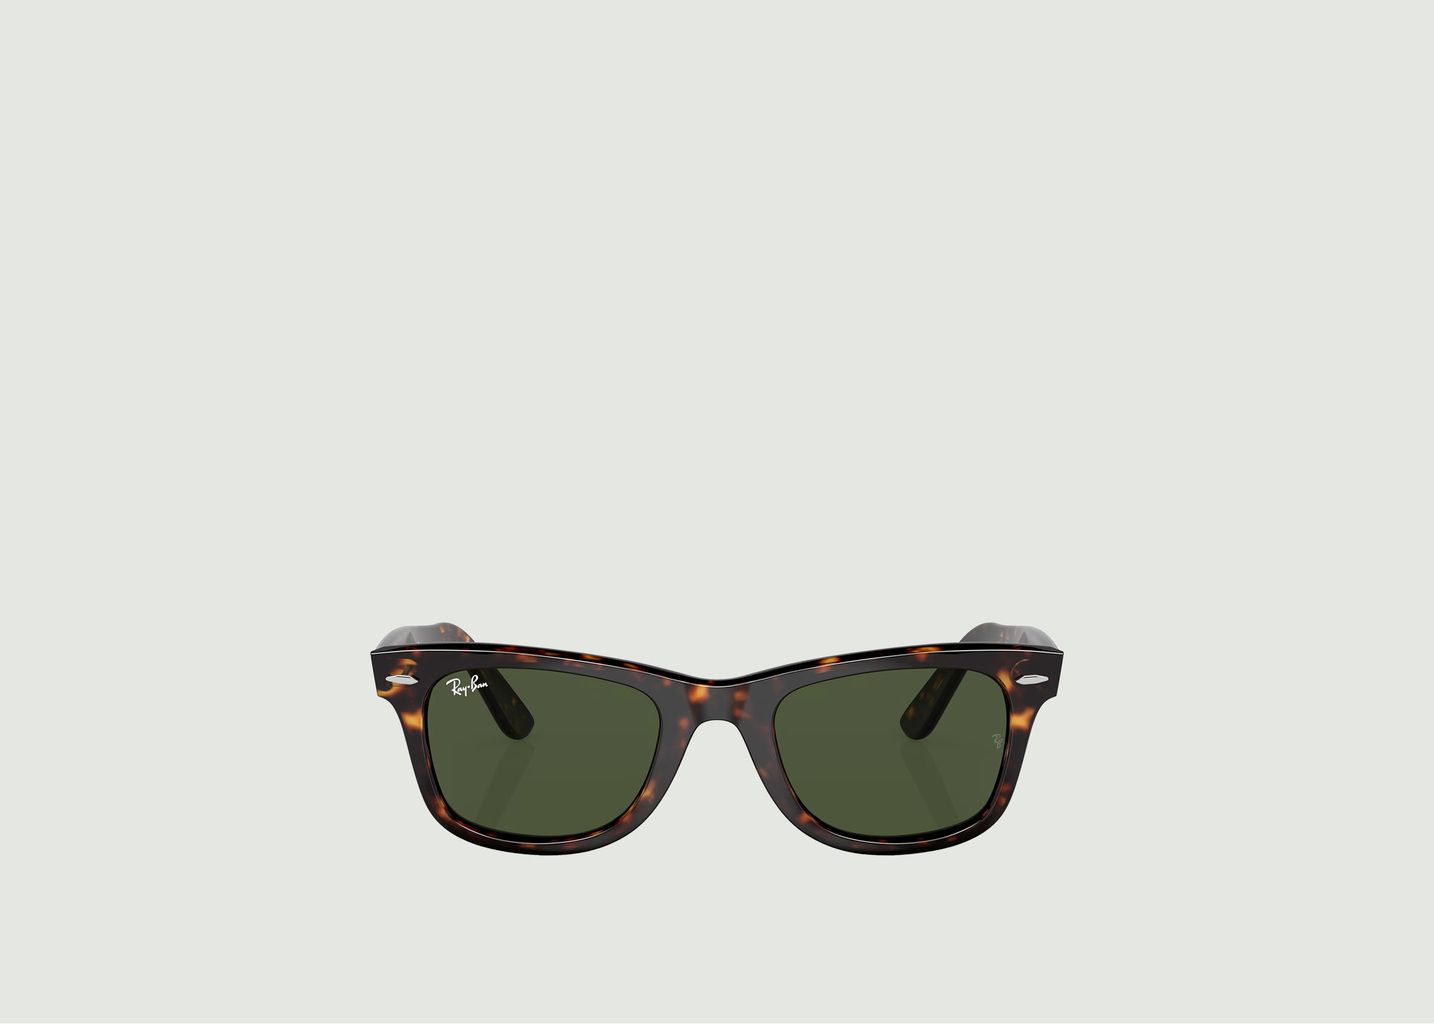 Wayfarer sunglasses - Ray-Ban